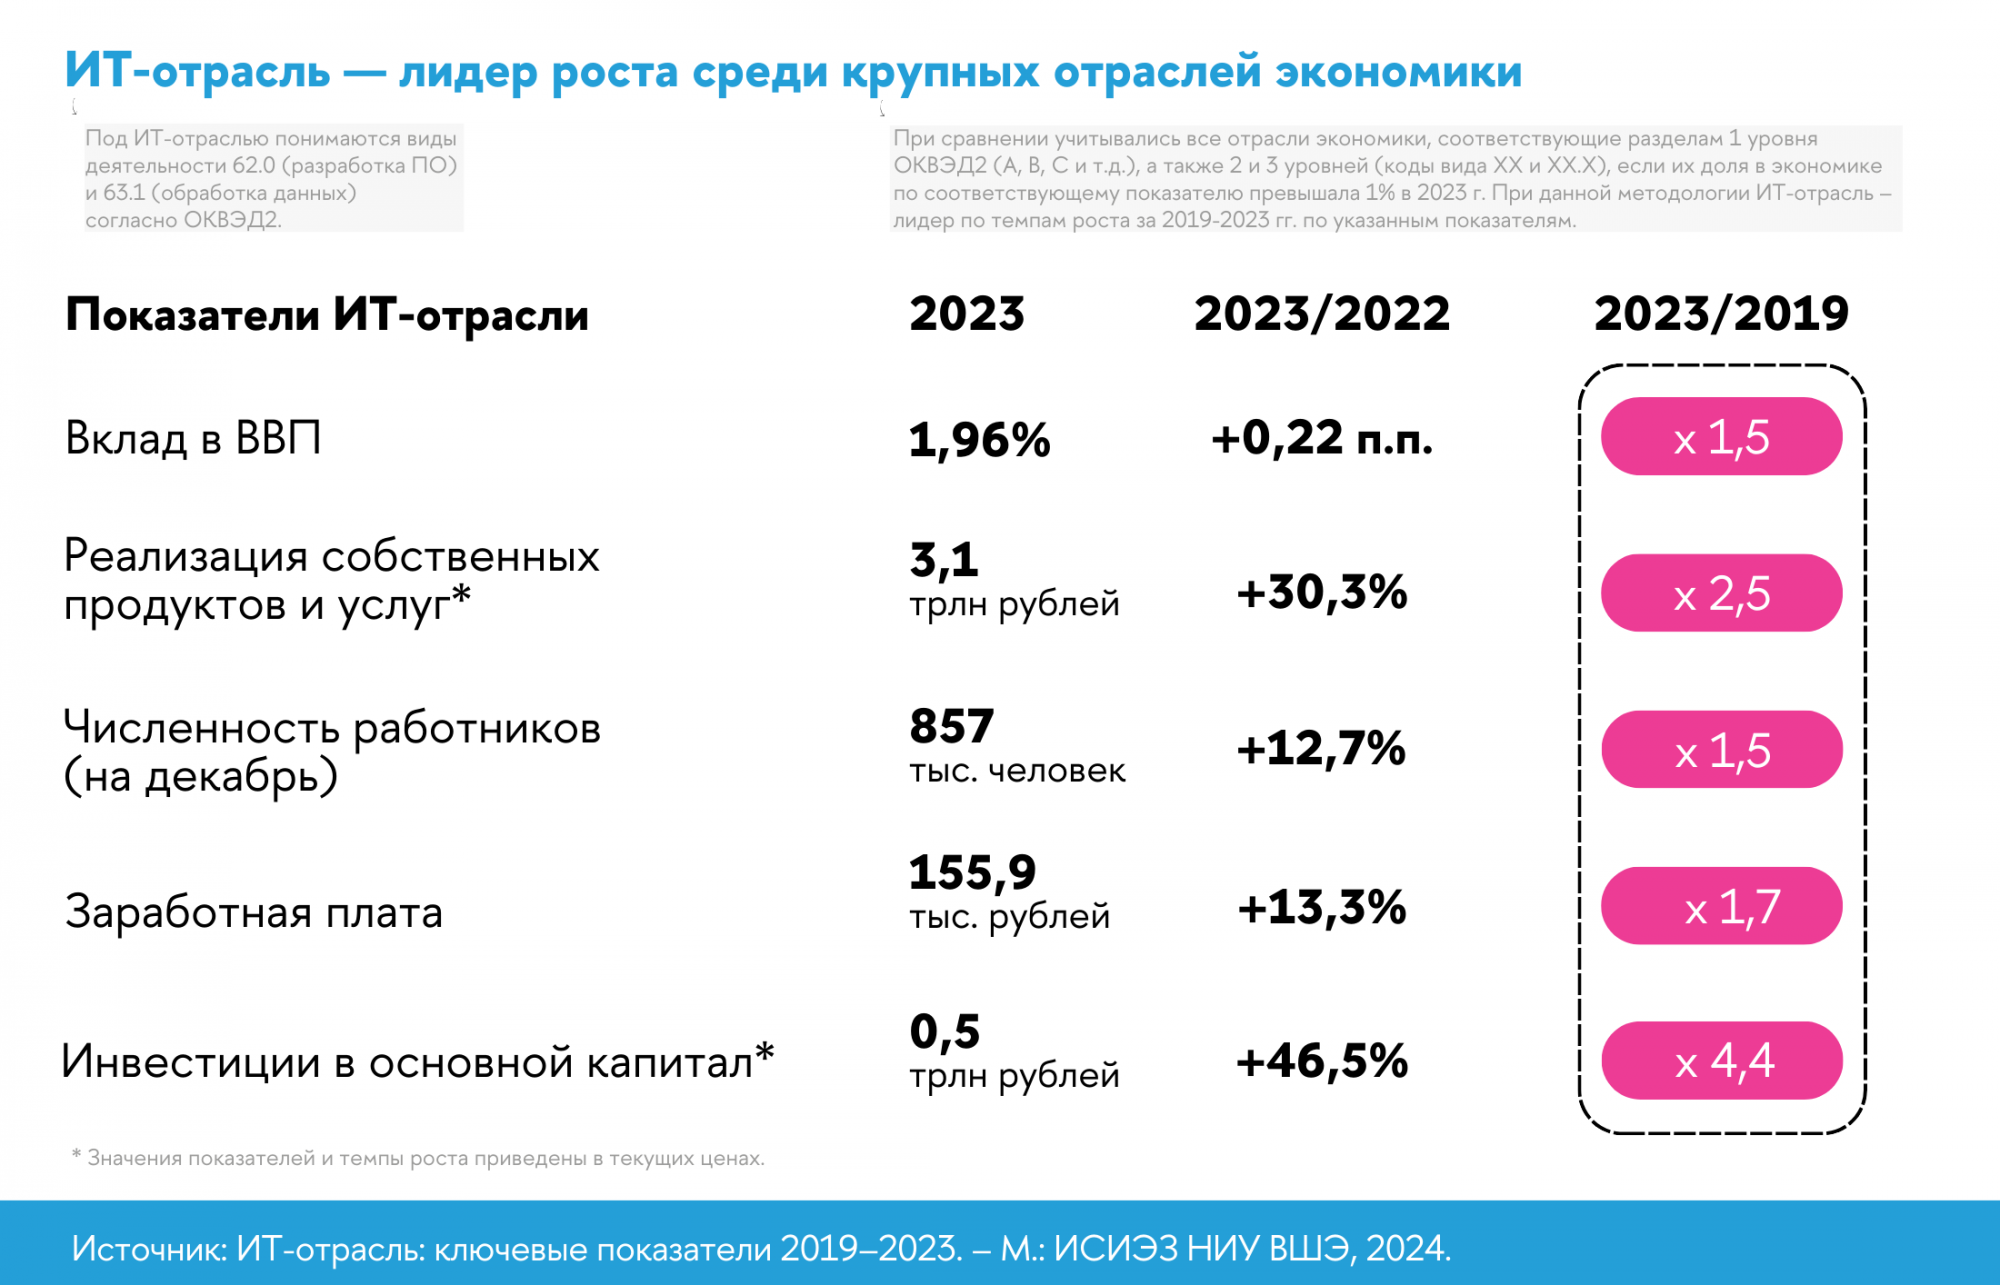 Динамика развития ИТ-отрасли за 2019-2023 гг.